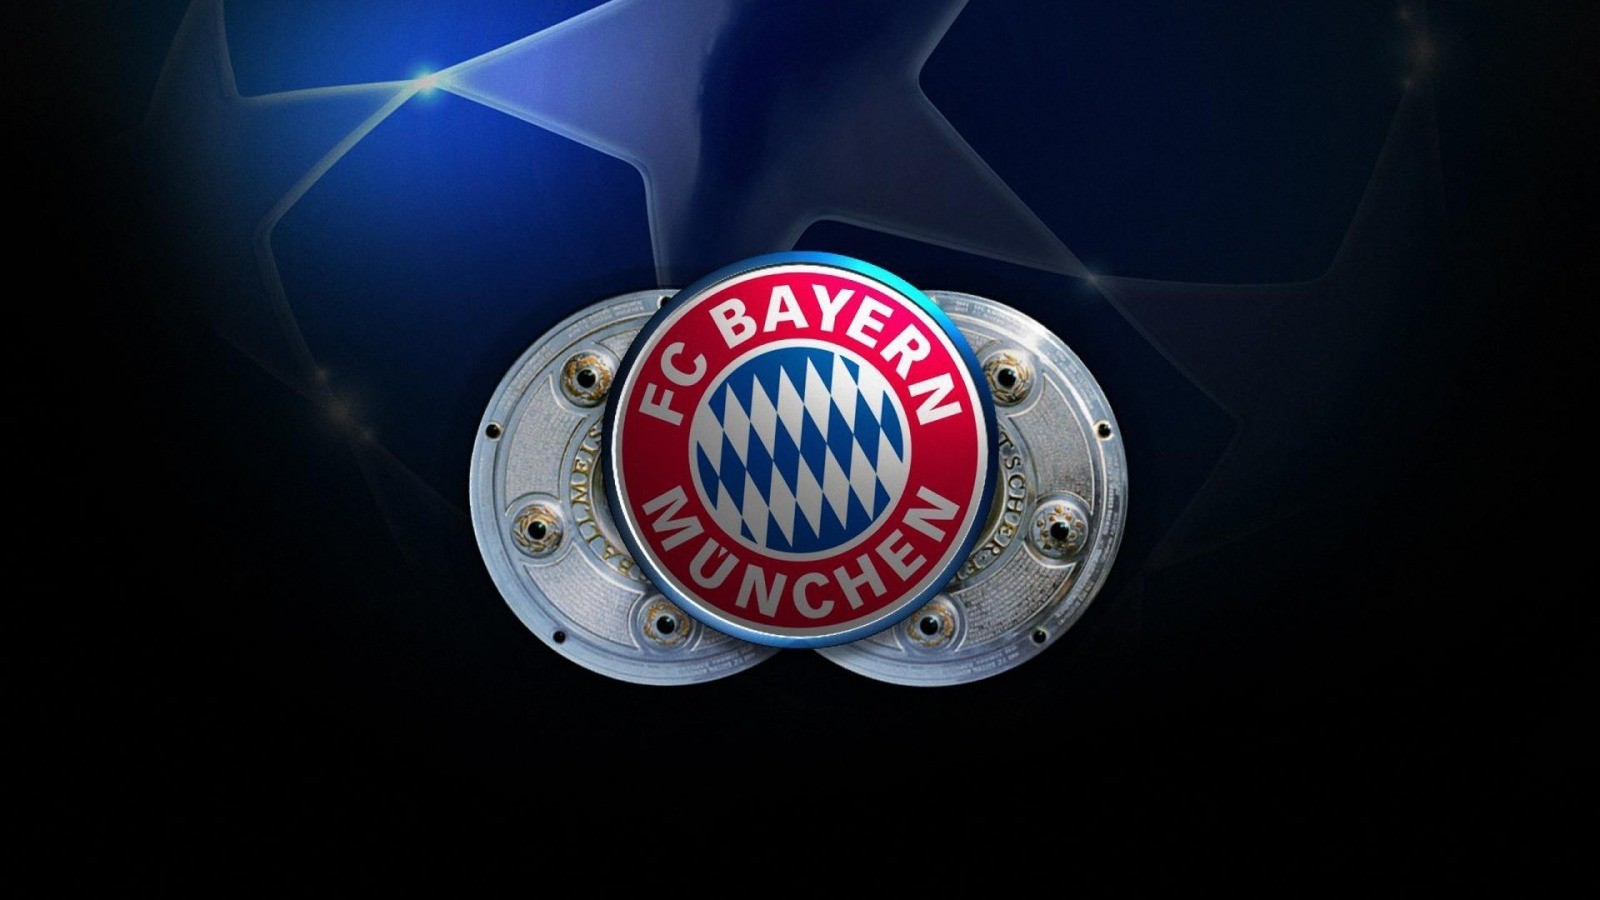 General 1600x900 FC Bayern Munchen logo soccer blue background soccer clubs sport